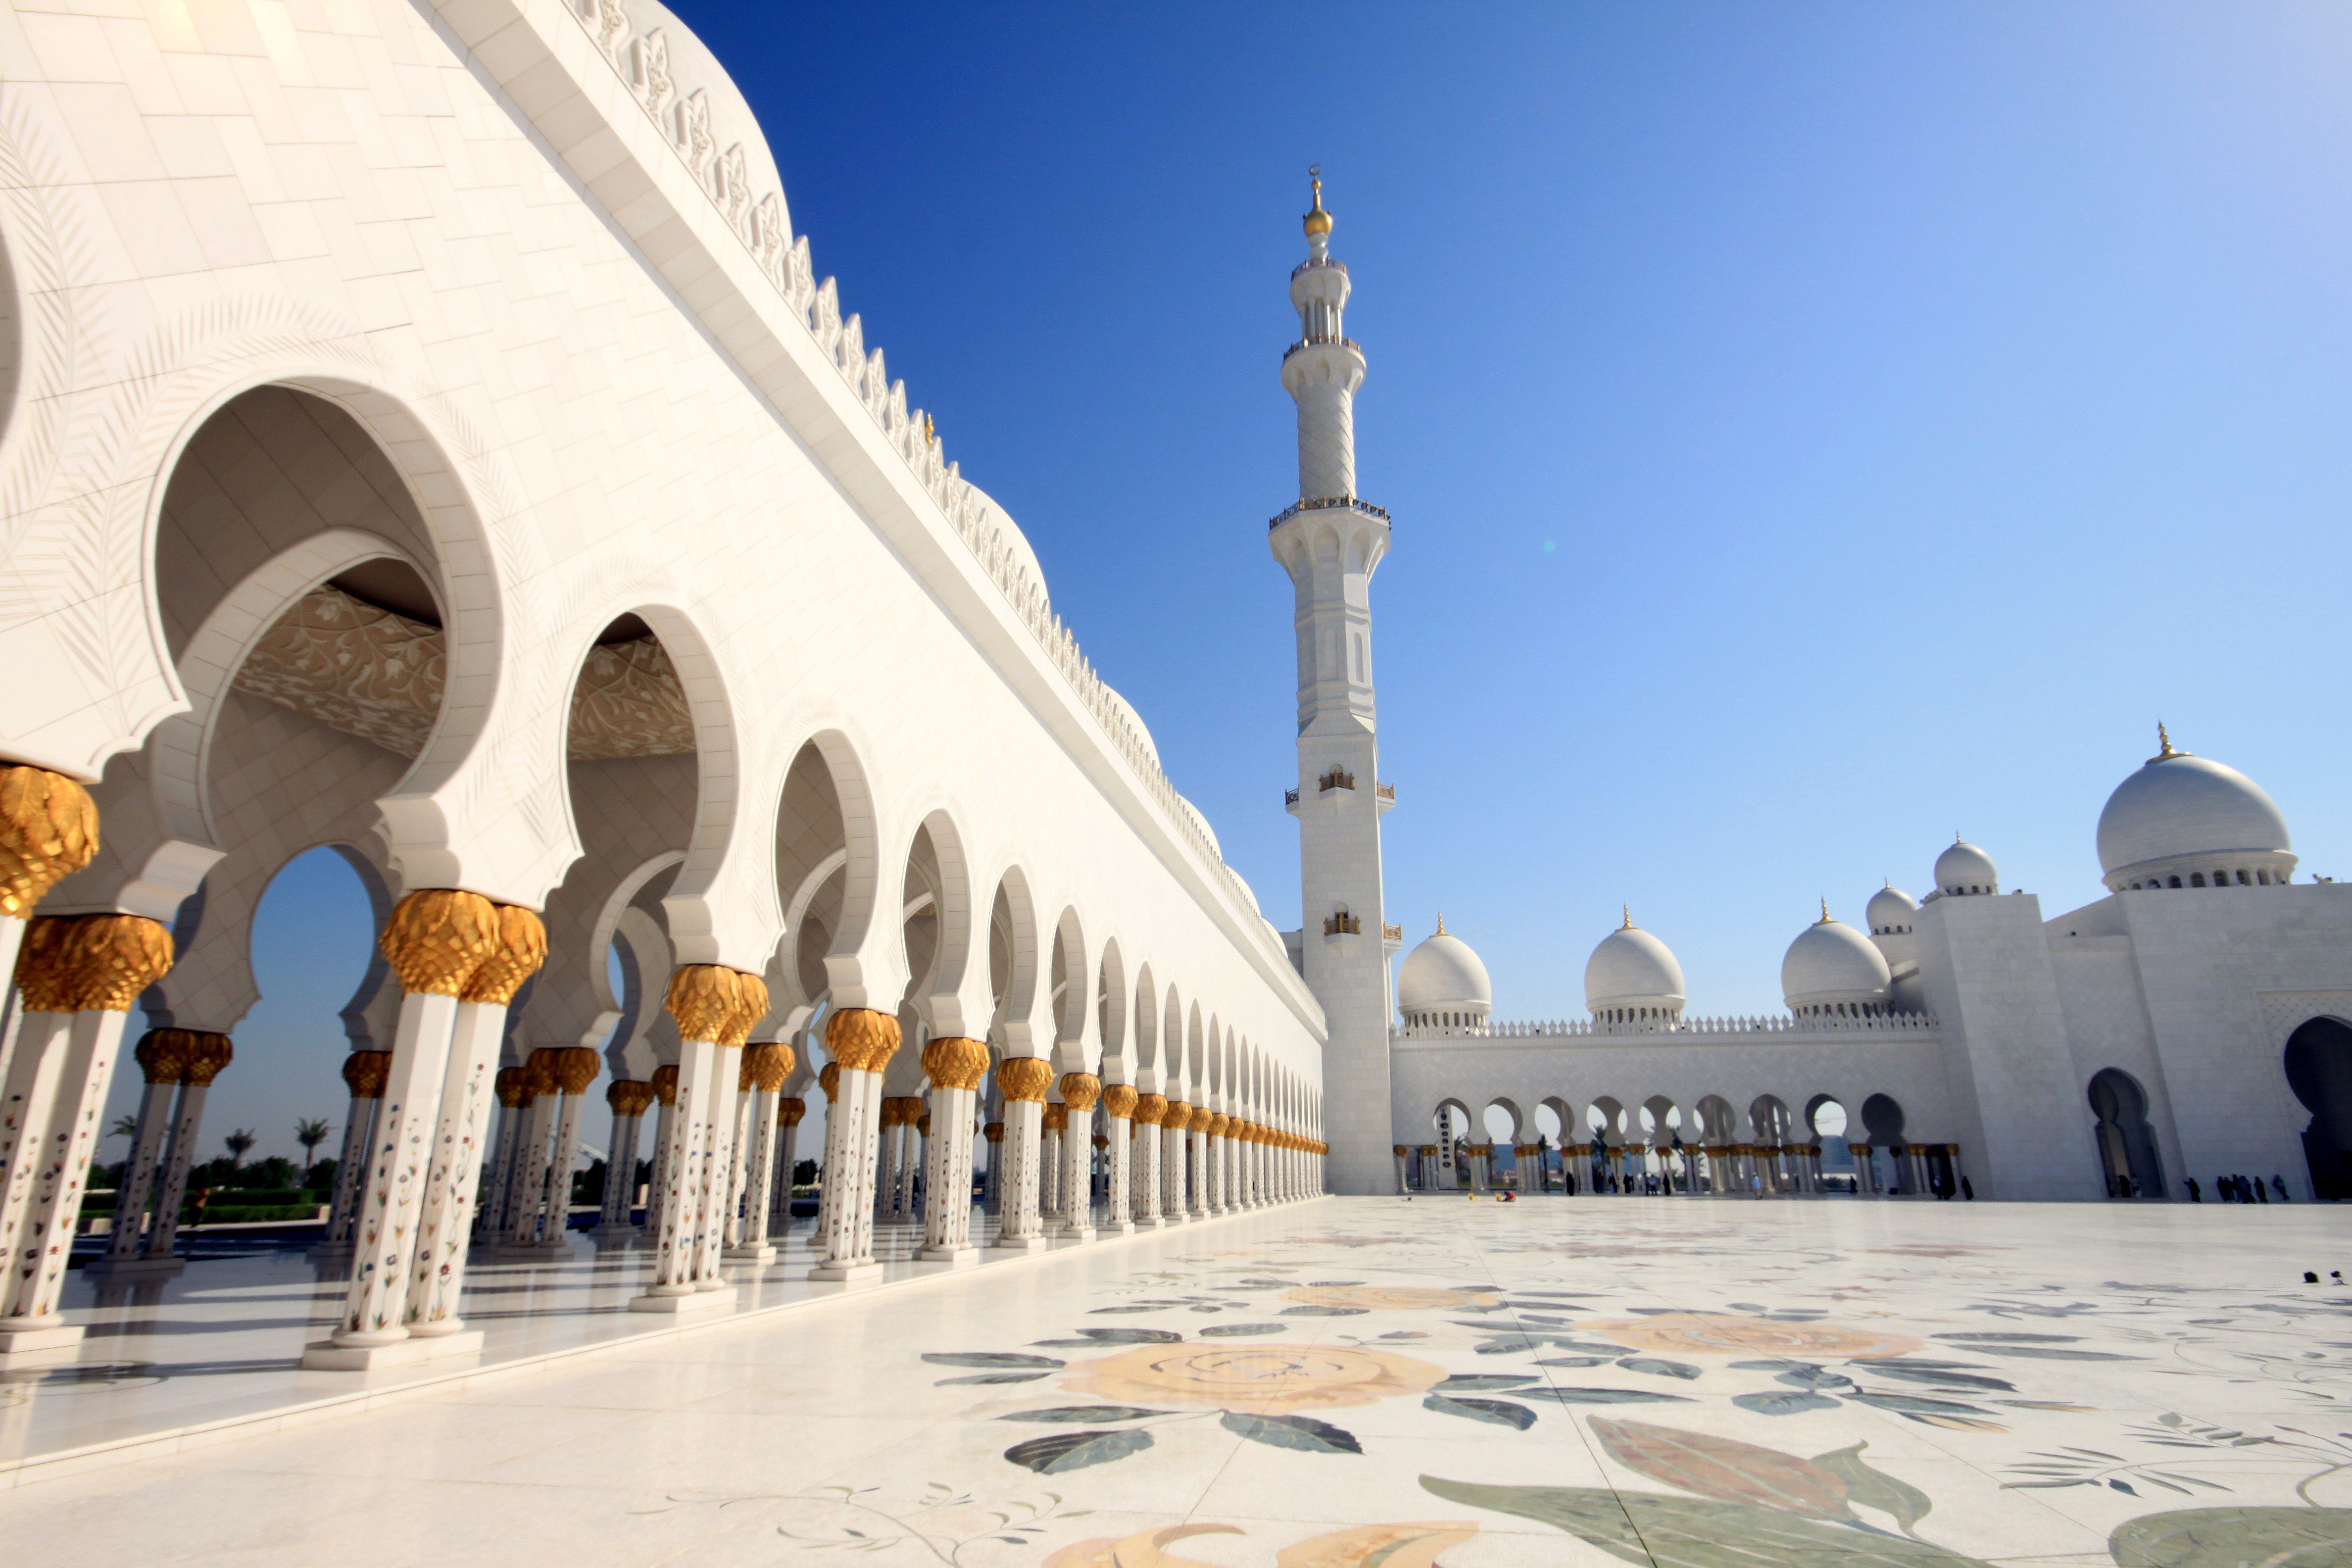 Sheikh Zayed Grand Mosque 4k Ultra HD Wallpaper